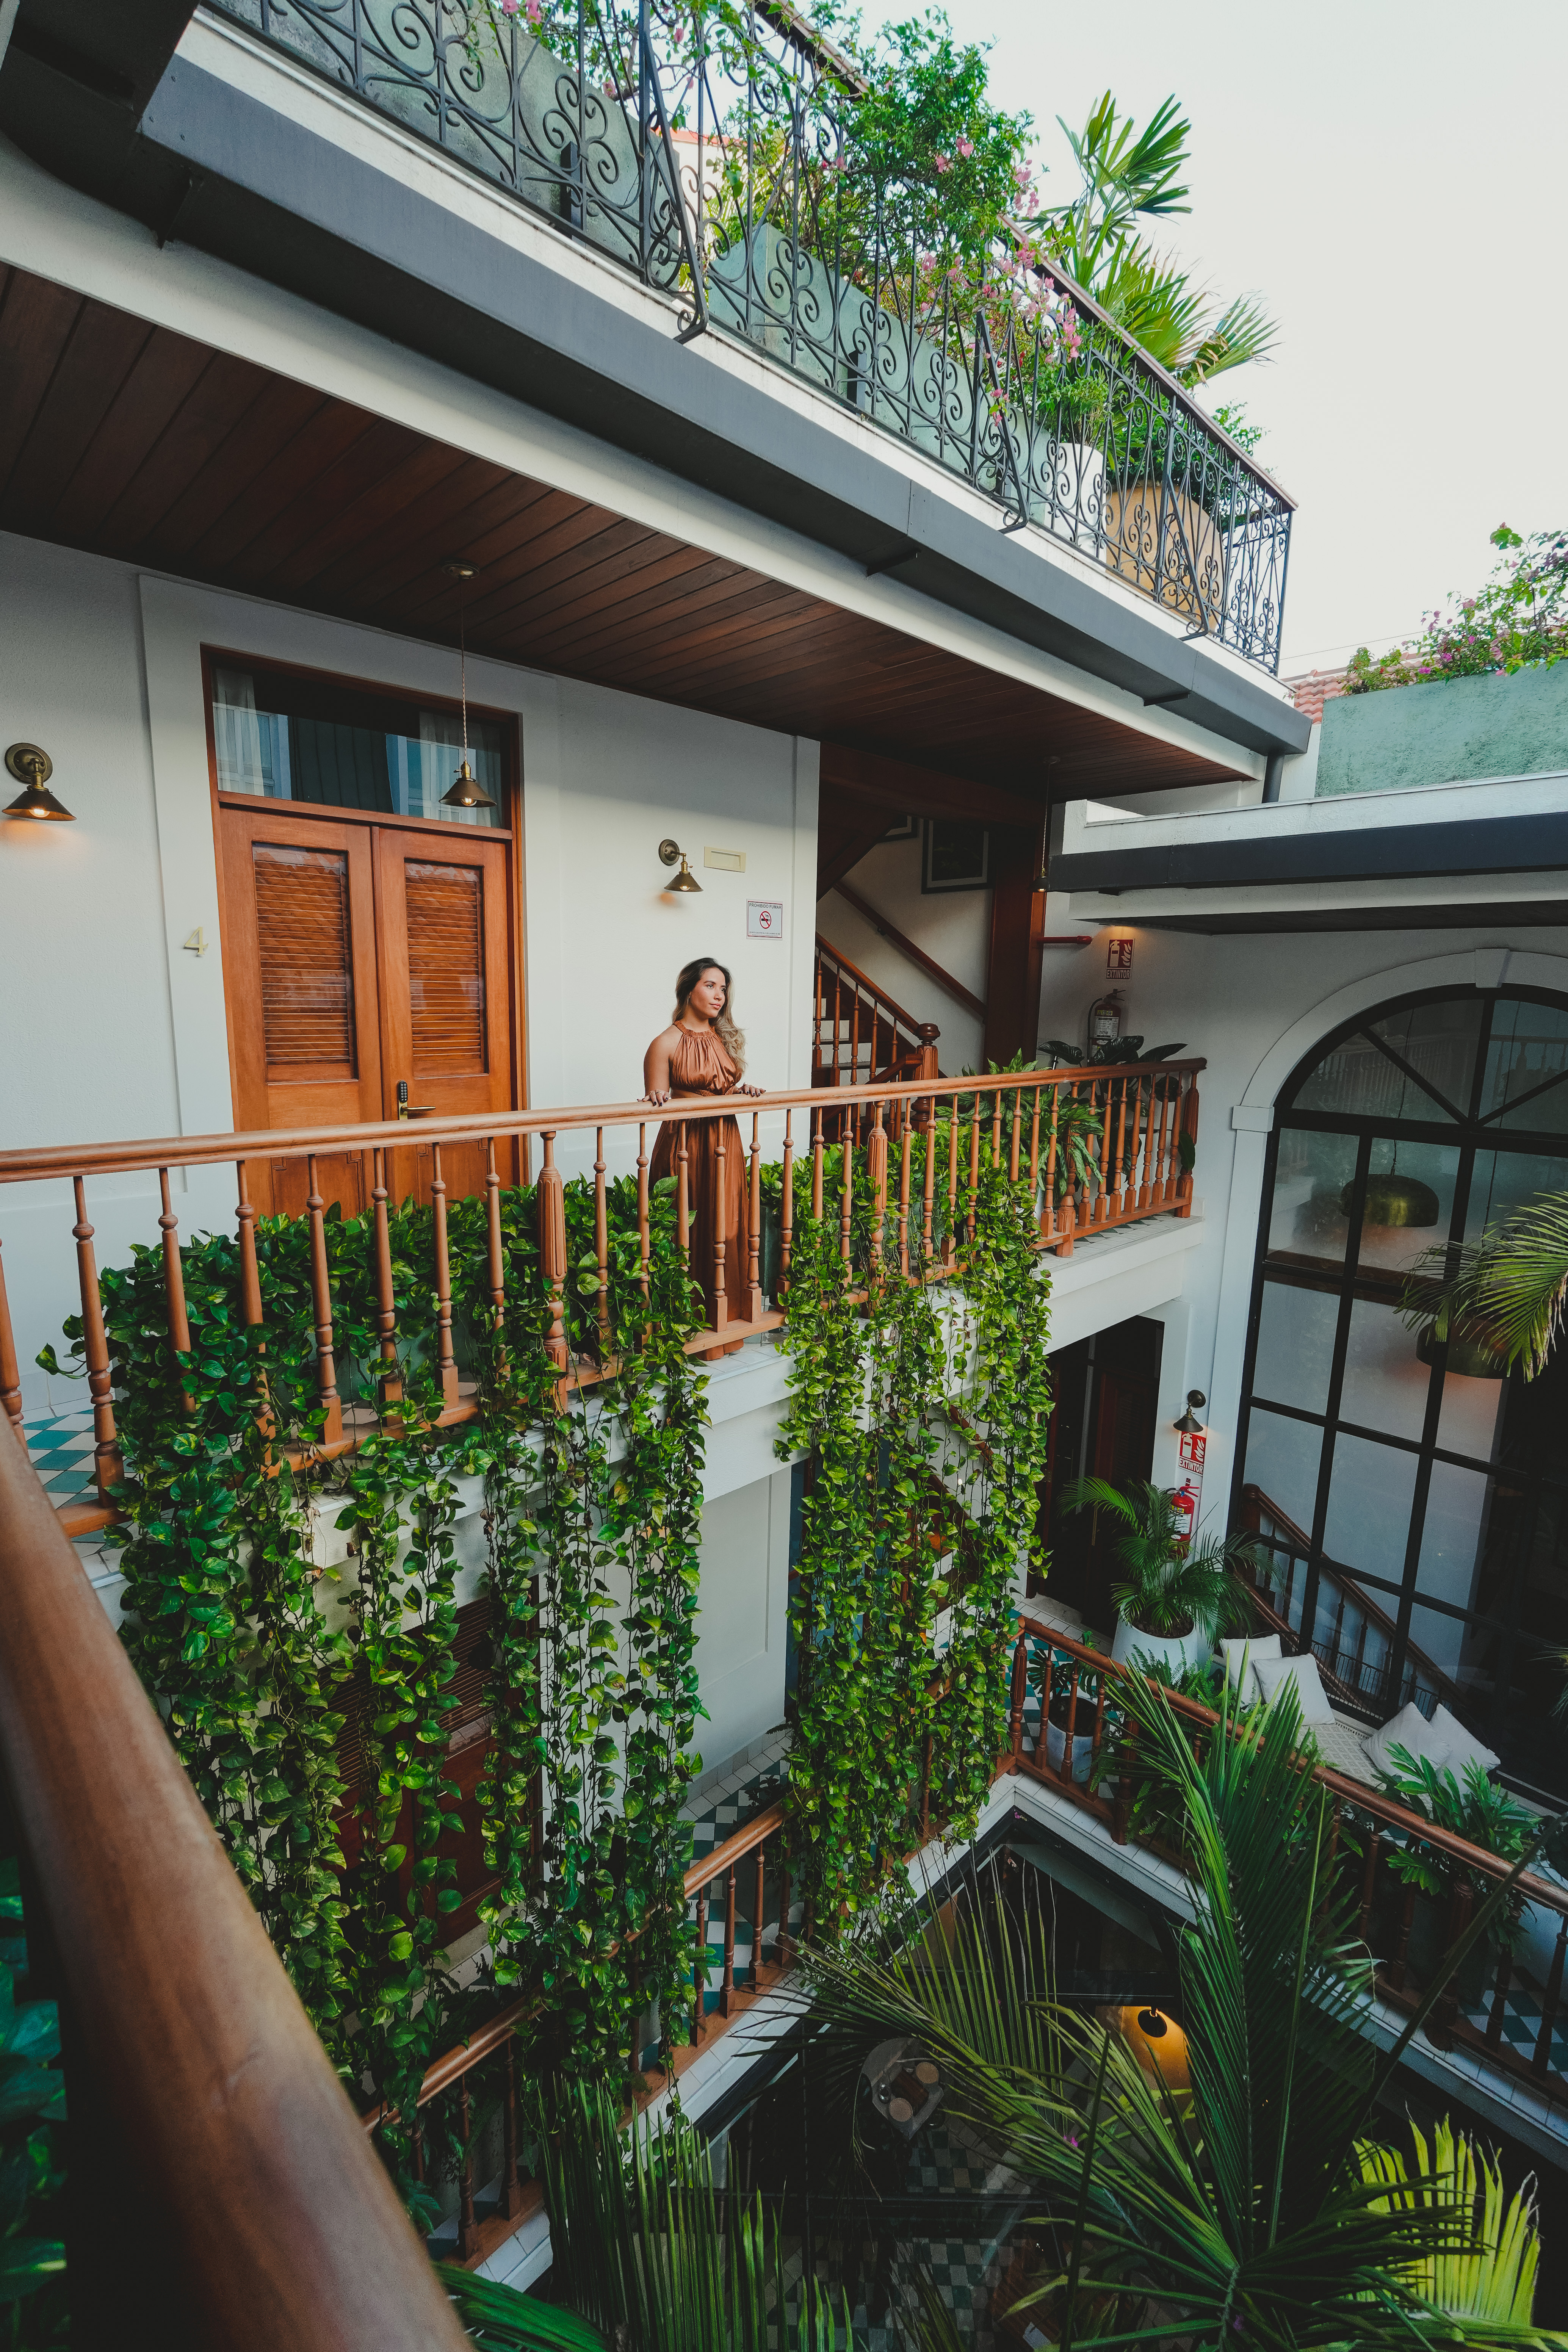 Amarla Casco Viejo Panama - greenery balconies